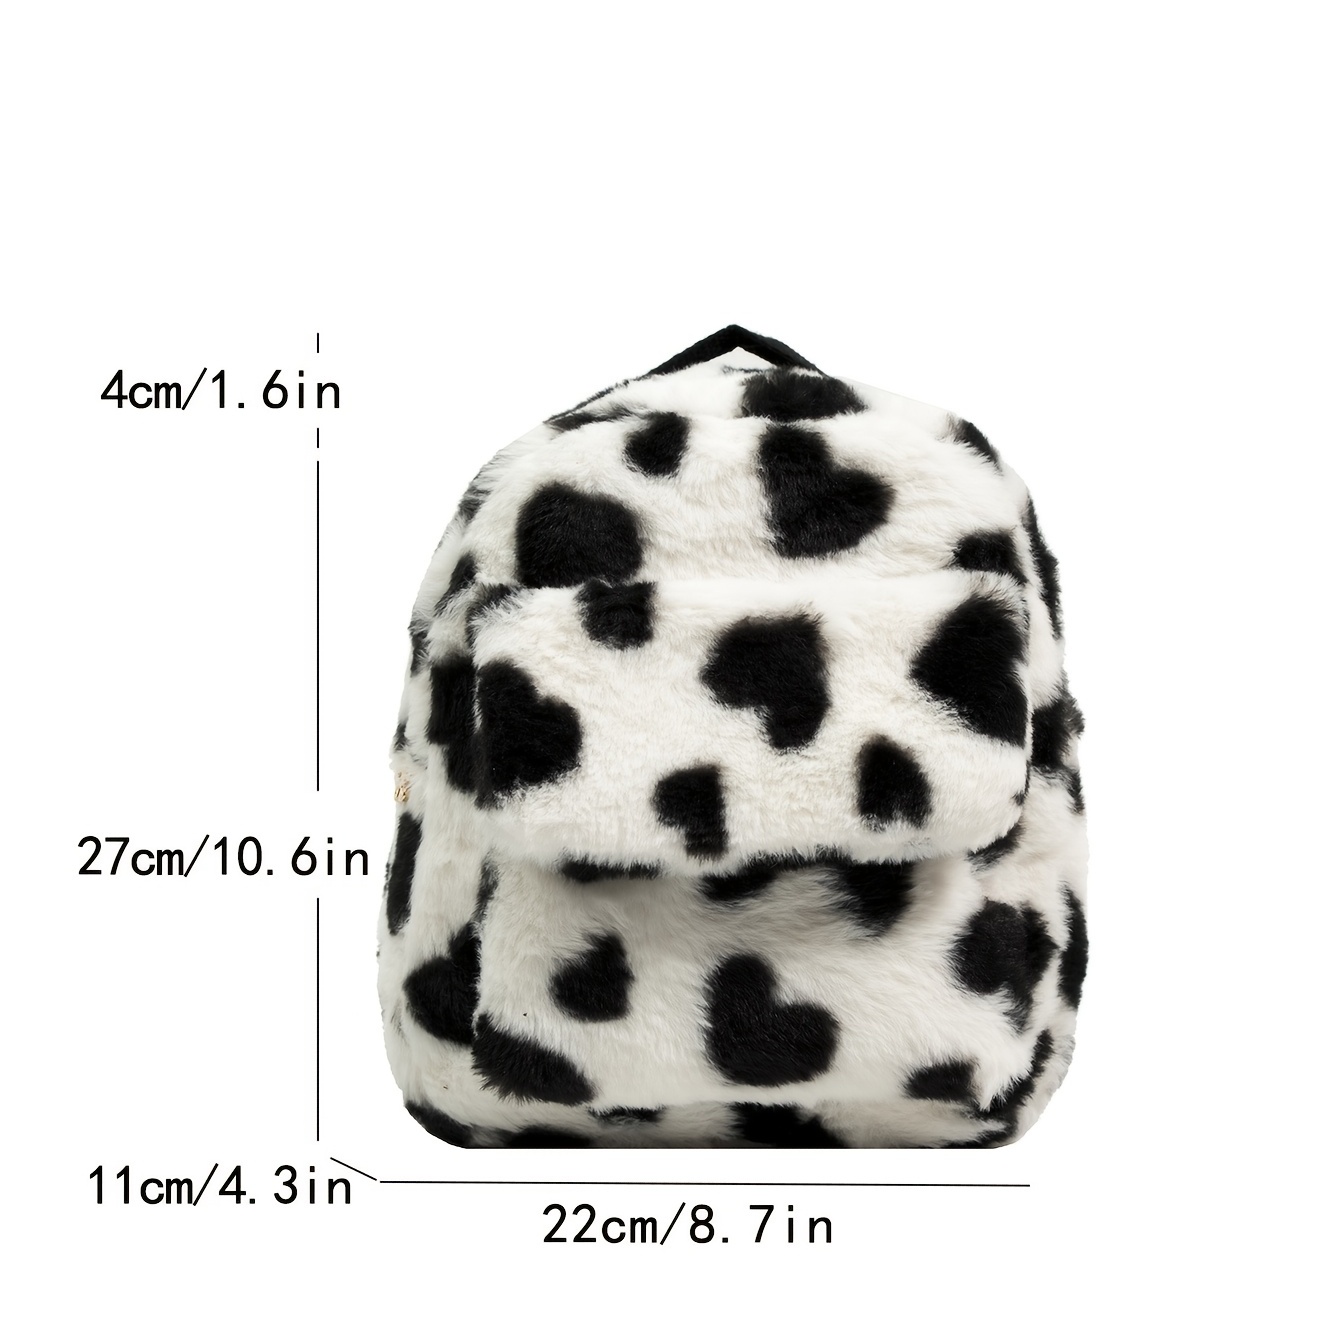 Fluffy Cheetah Bag! <3 large size!